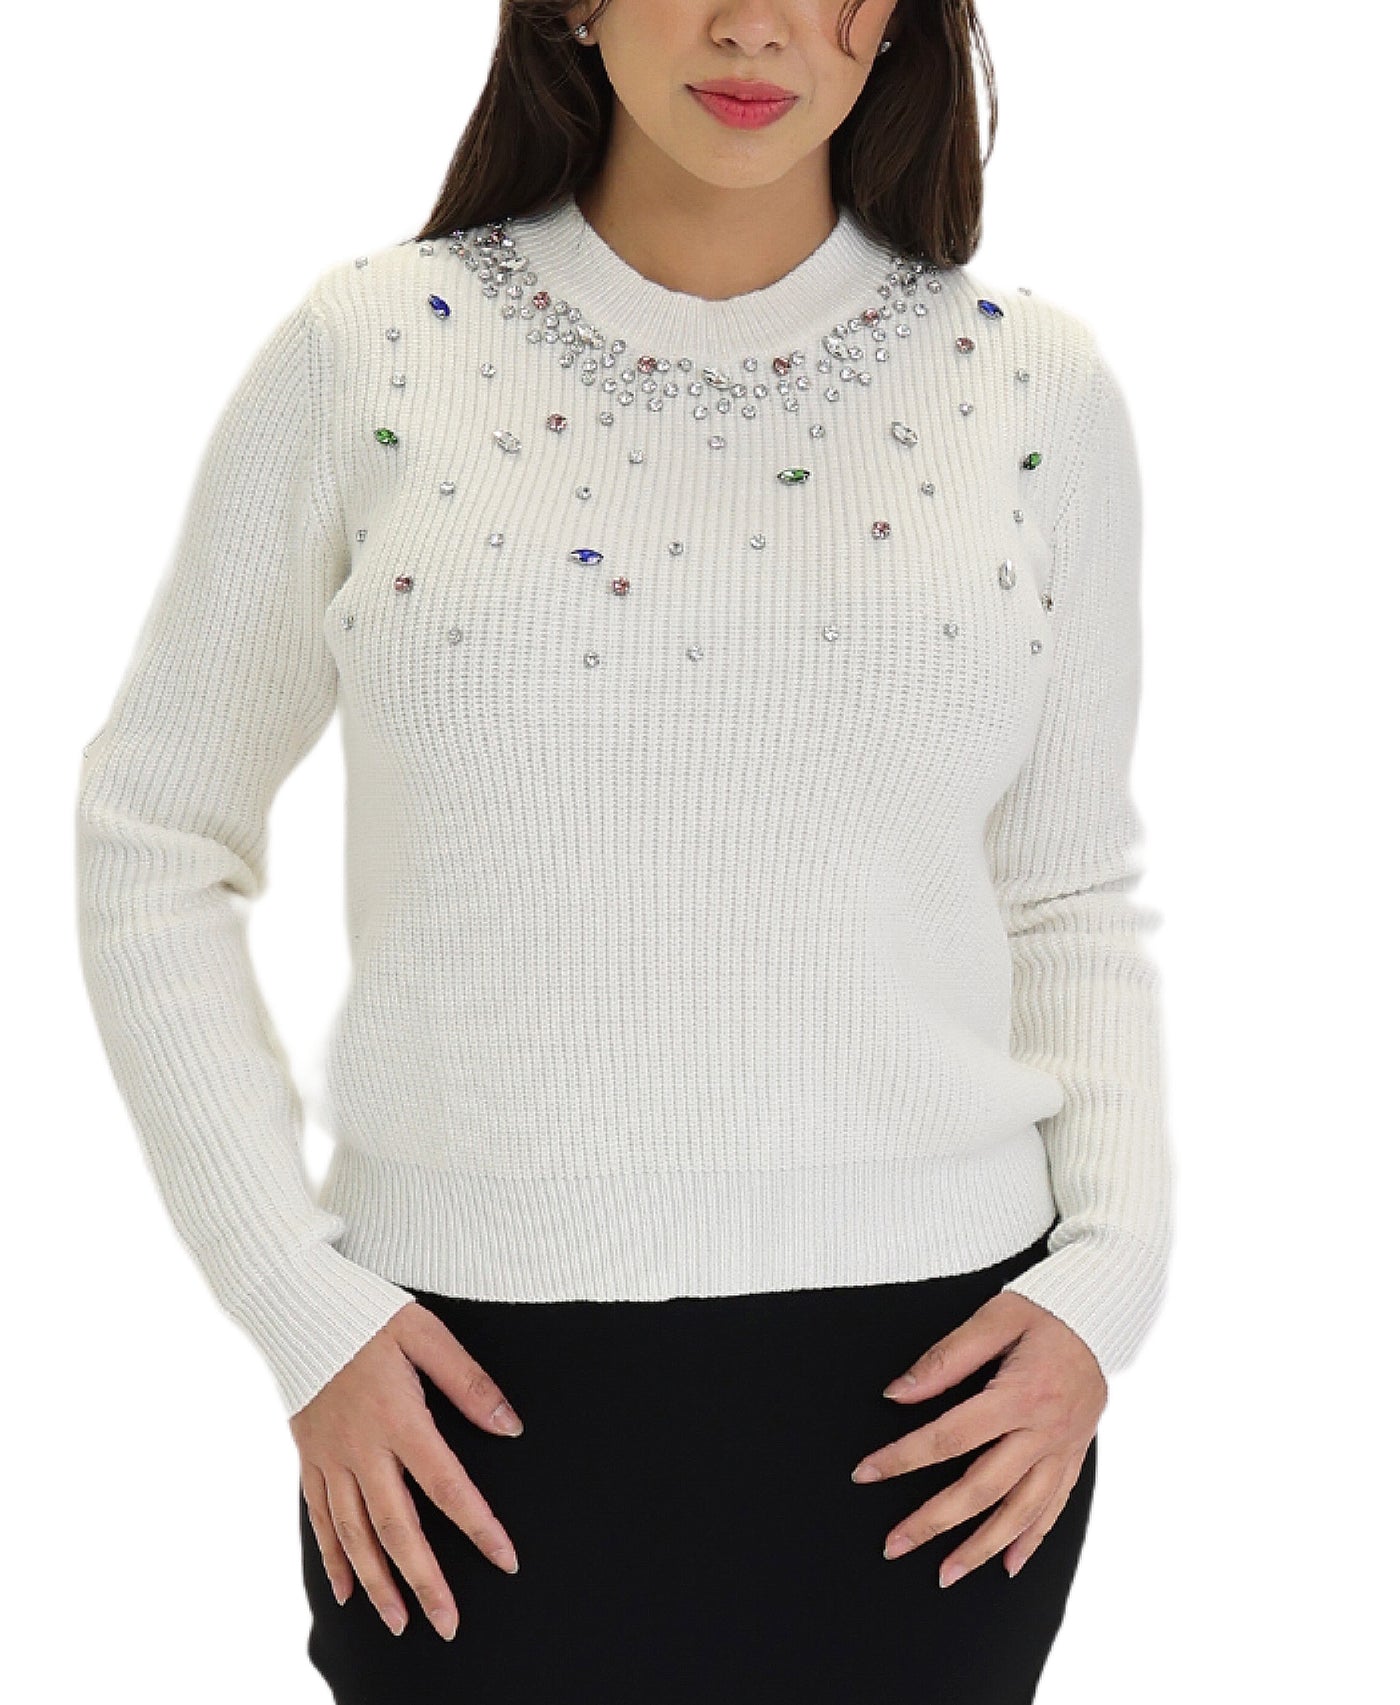 Sweater w/ Multi Color Jewels image 1